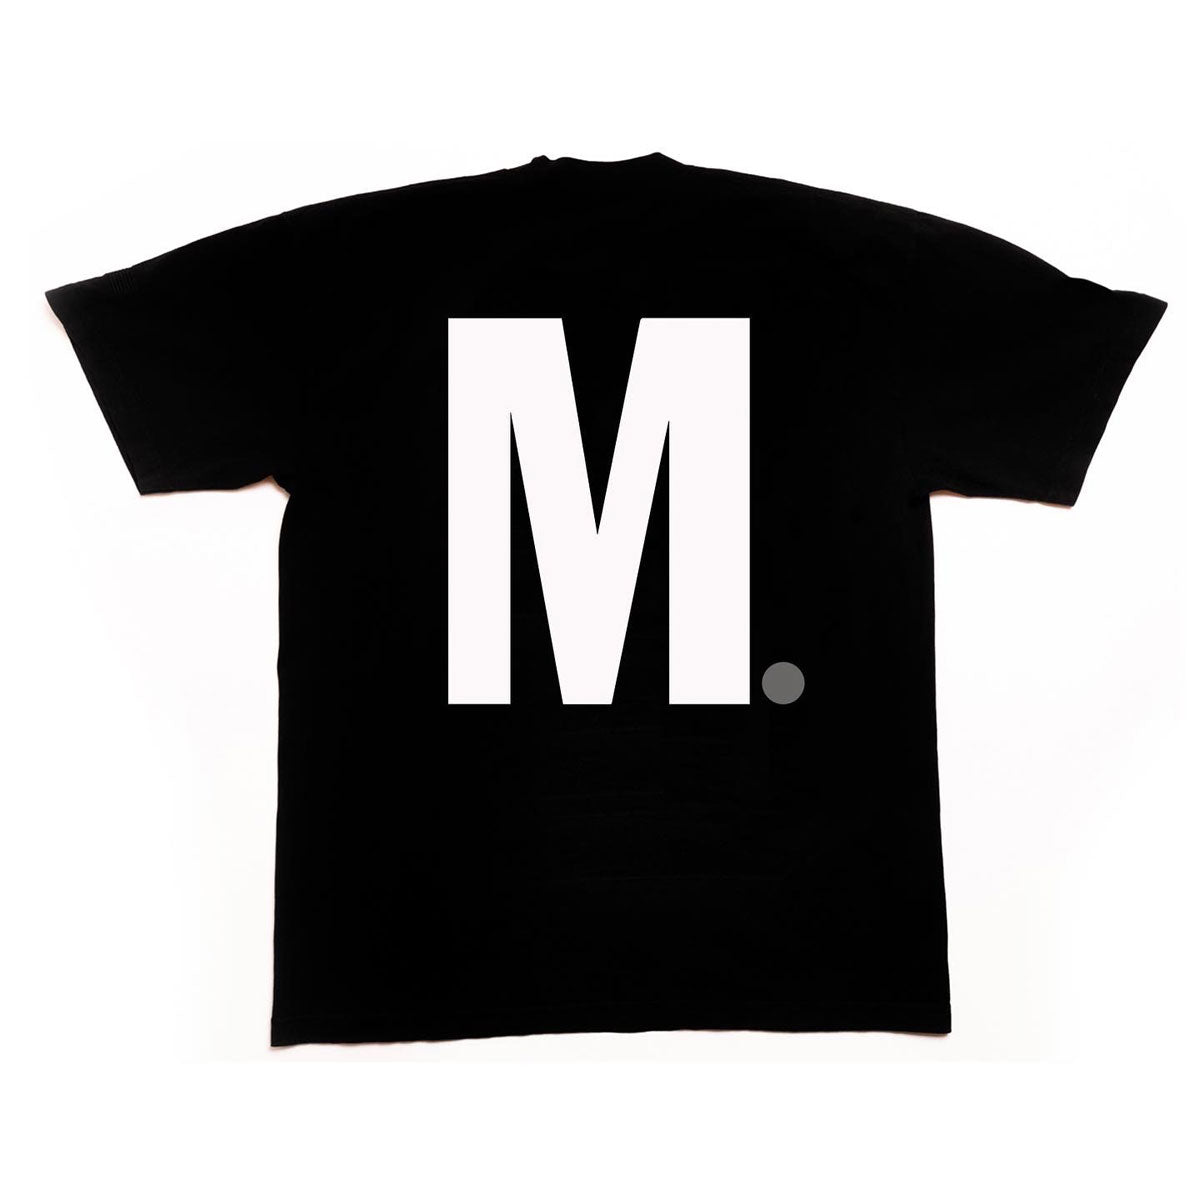 Big M T-Shirt - Black/Bone - Back